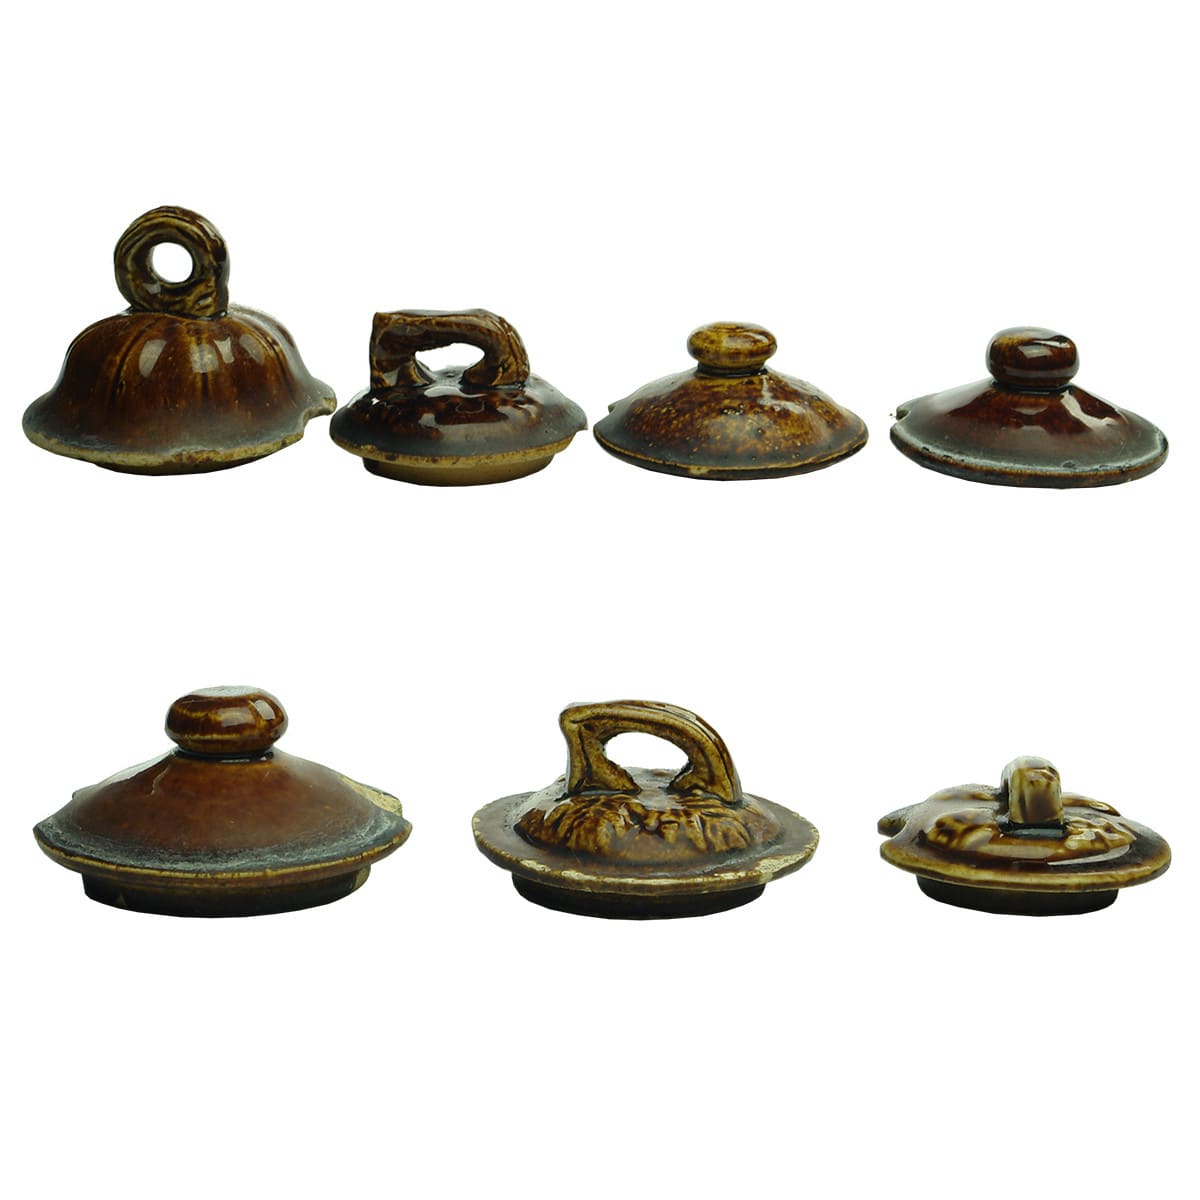 7 Teapot Lids. Rockingham glaze. Different patterns and various sizes.